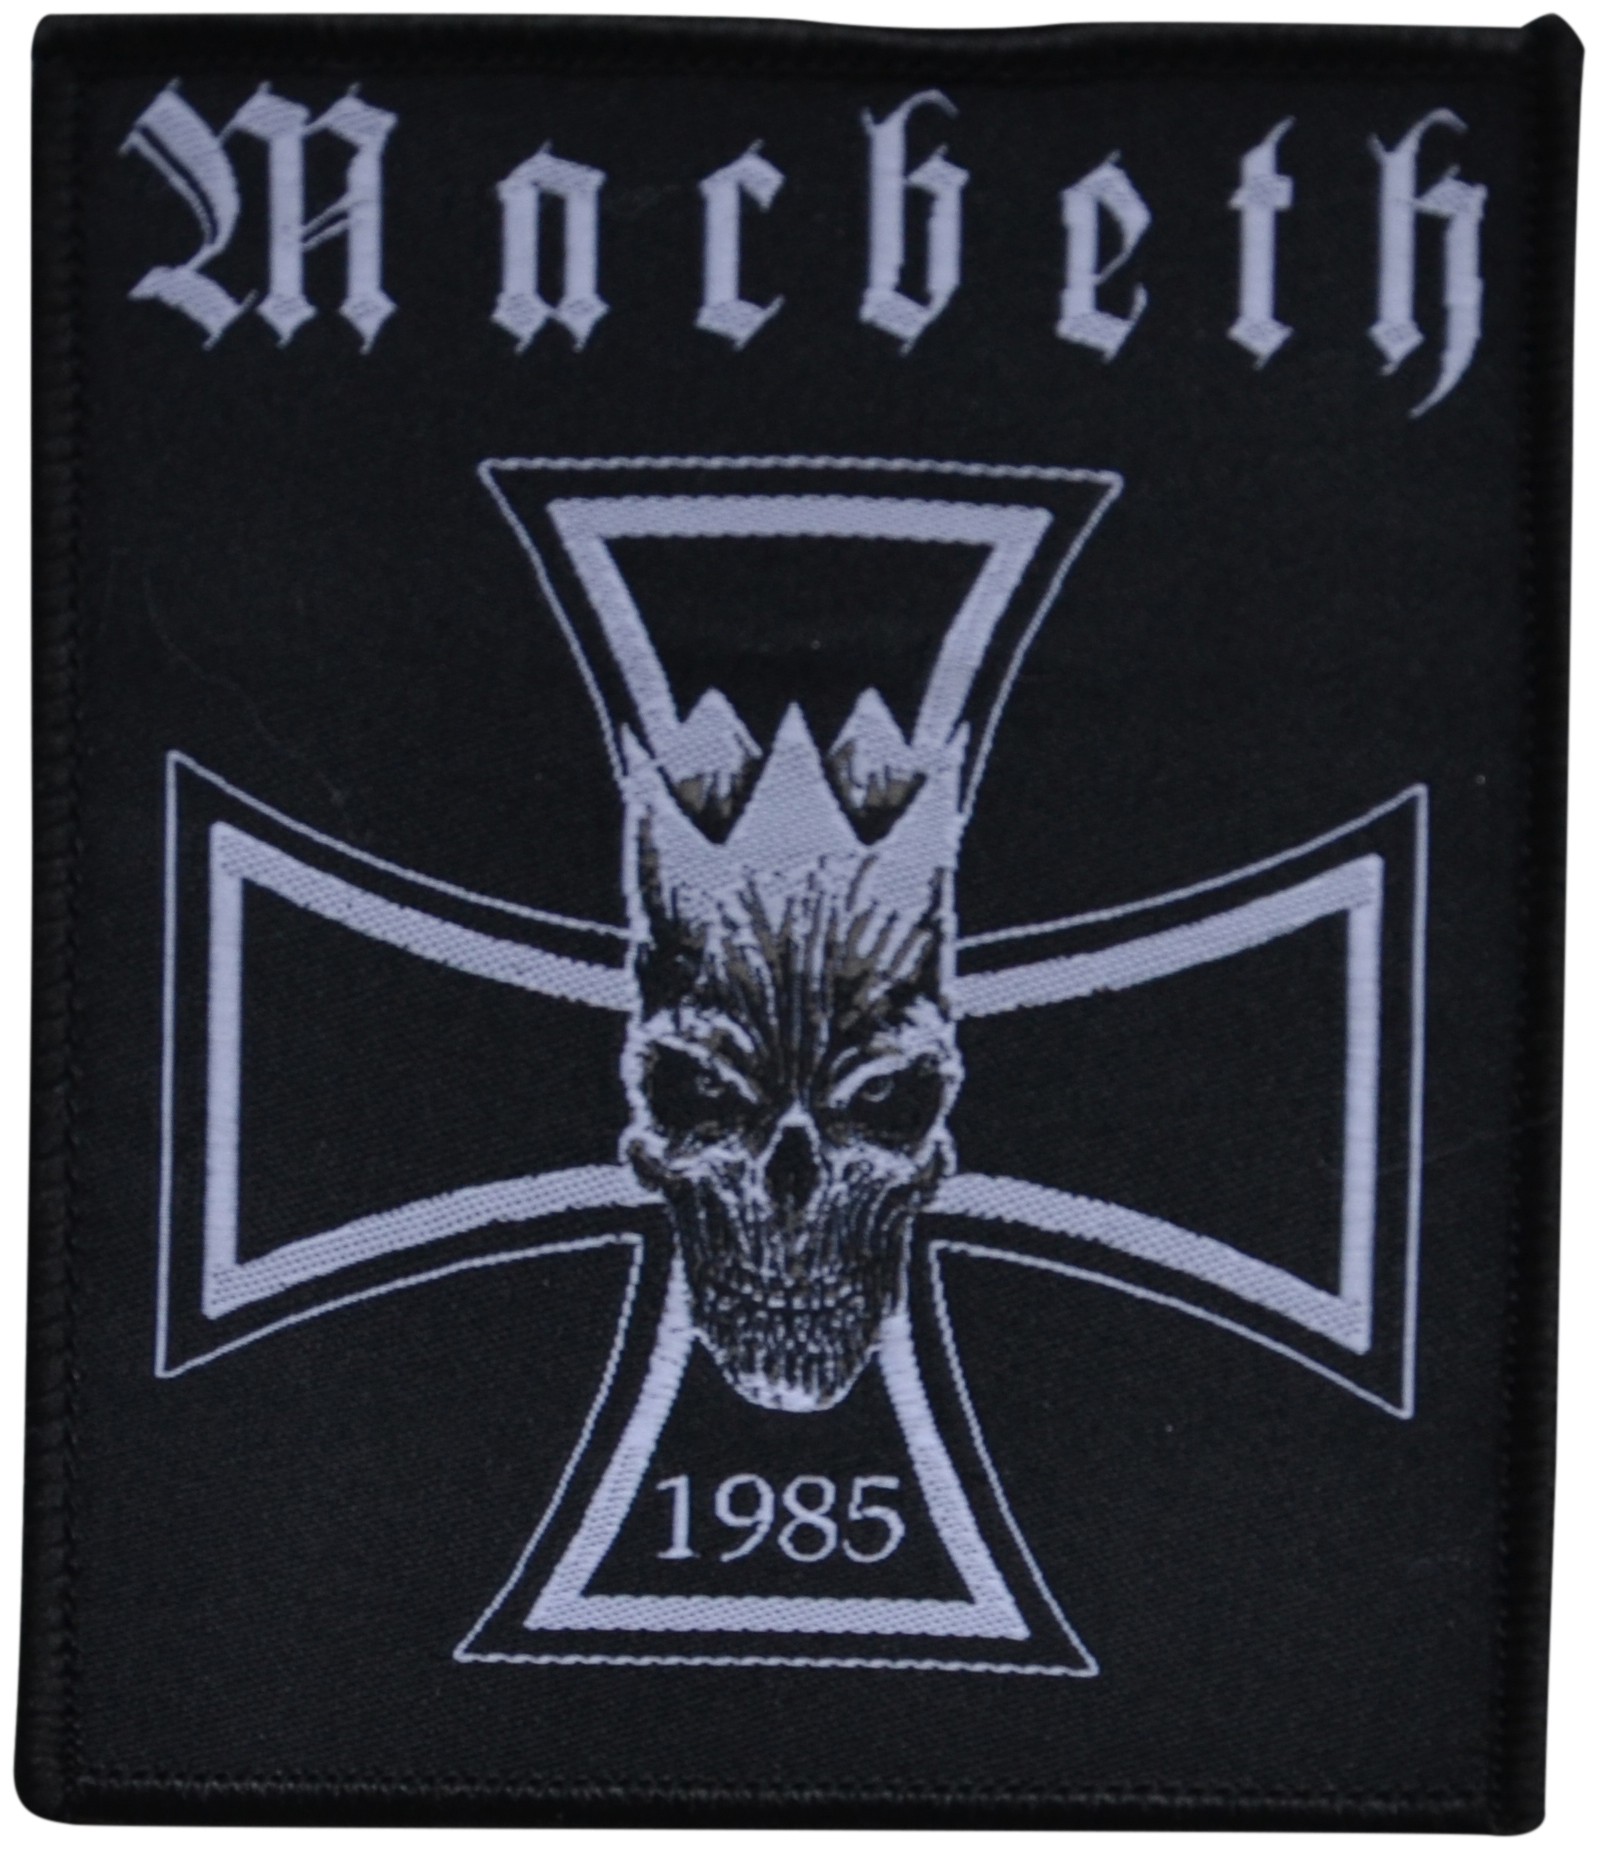 Macbeth - 1985 Kreuz